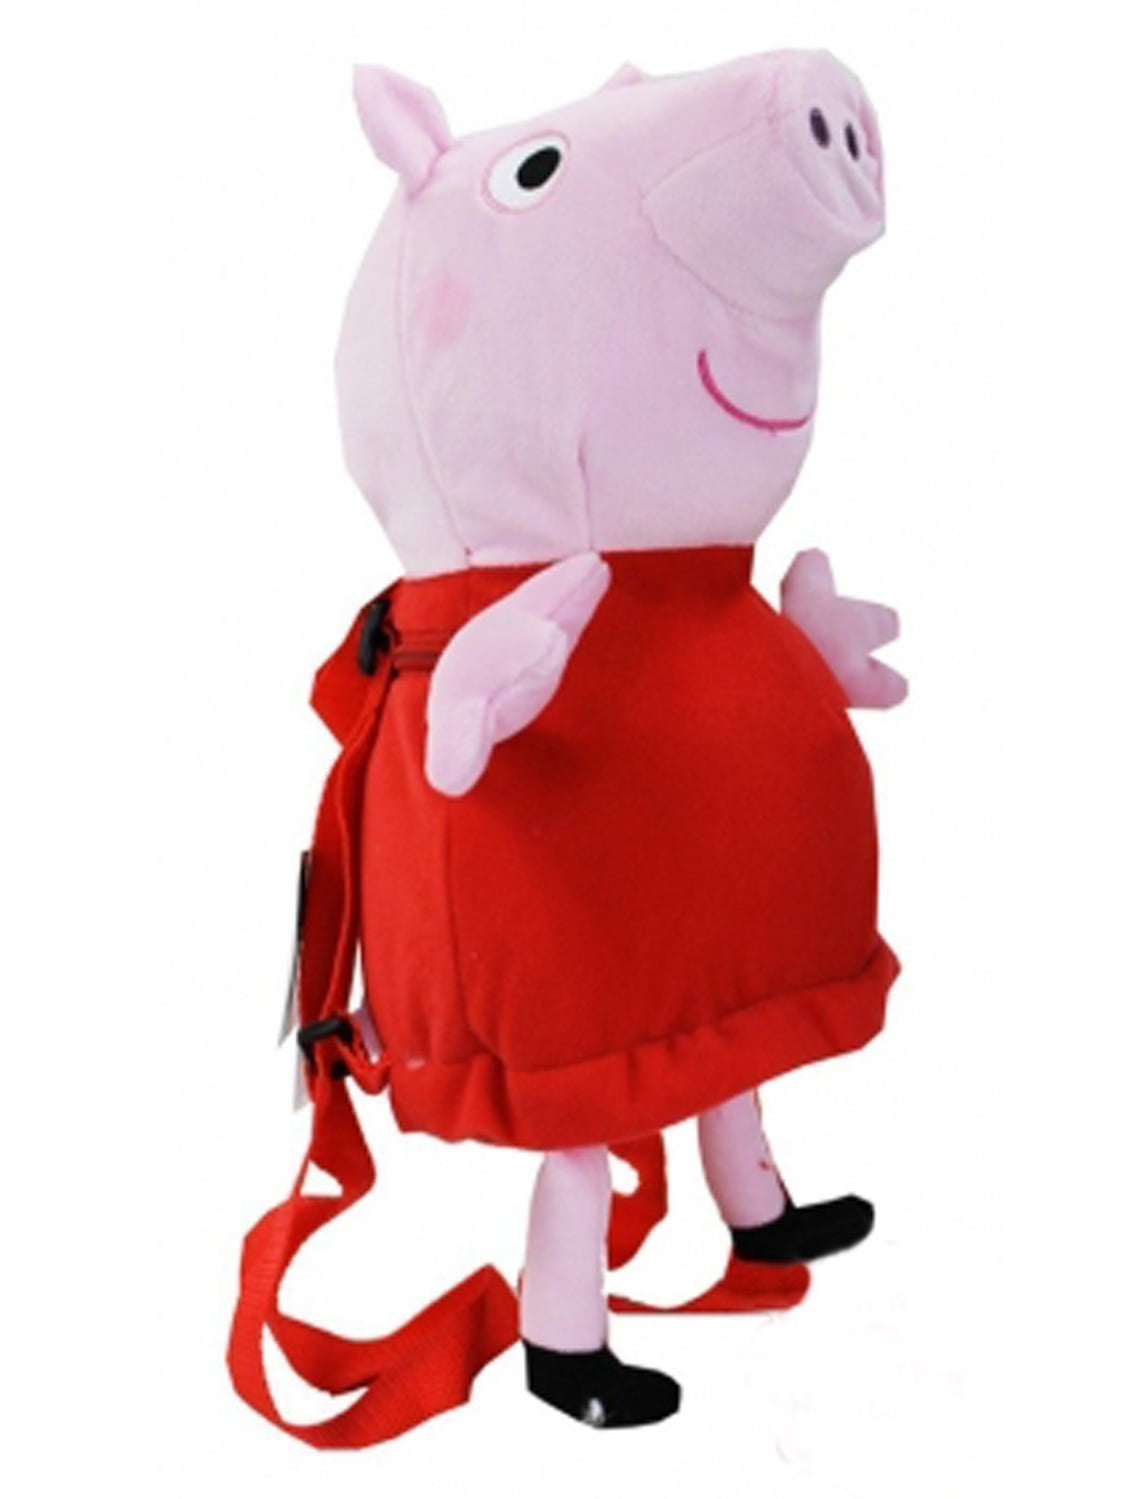 Plush Backpack 12" Soft Doll Toys New Licensed 105383 Peppa Pig 